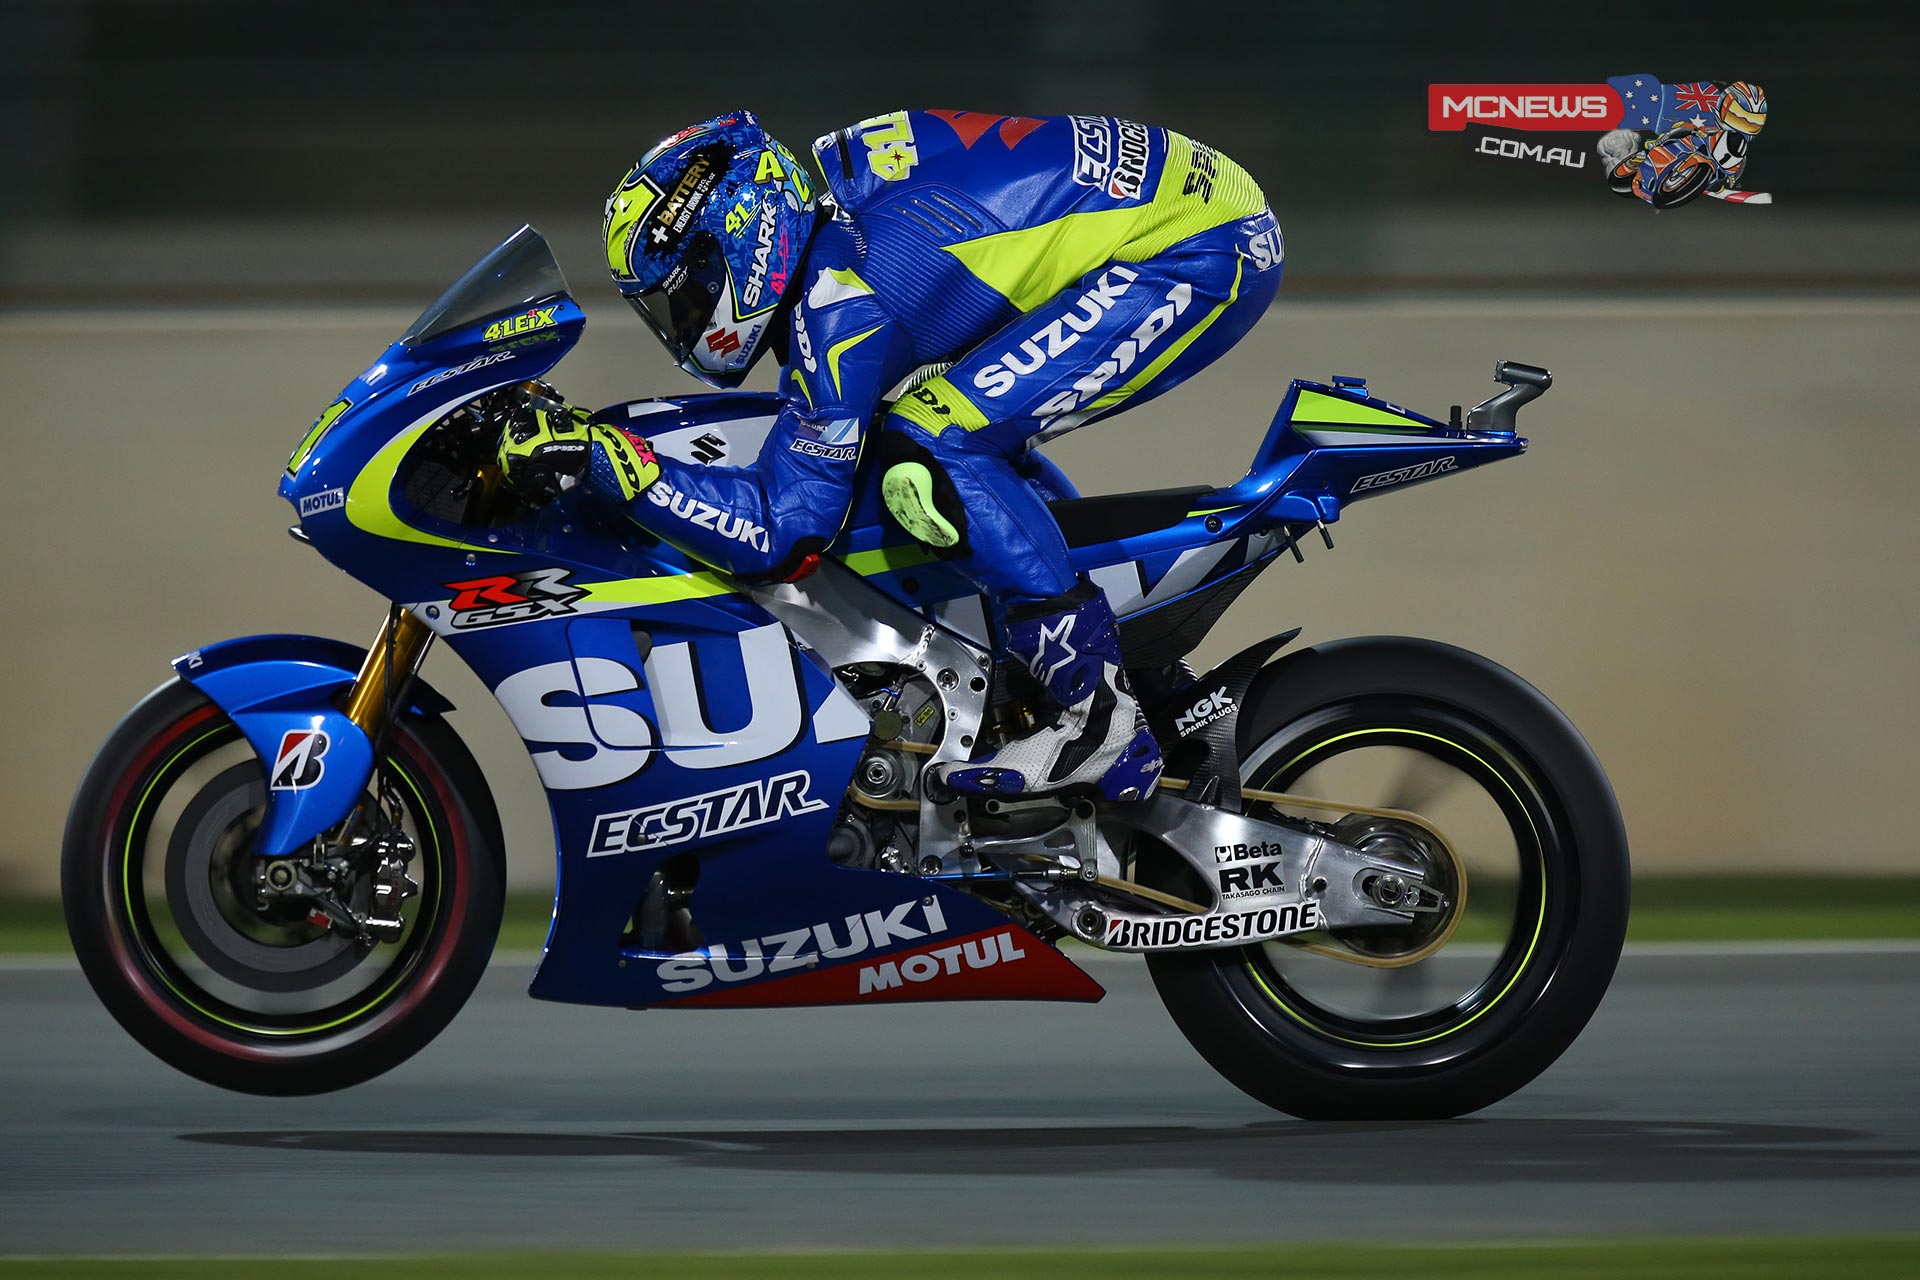 Qatar MotoGP 2015 Image Gallery B  MCNews.com.au